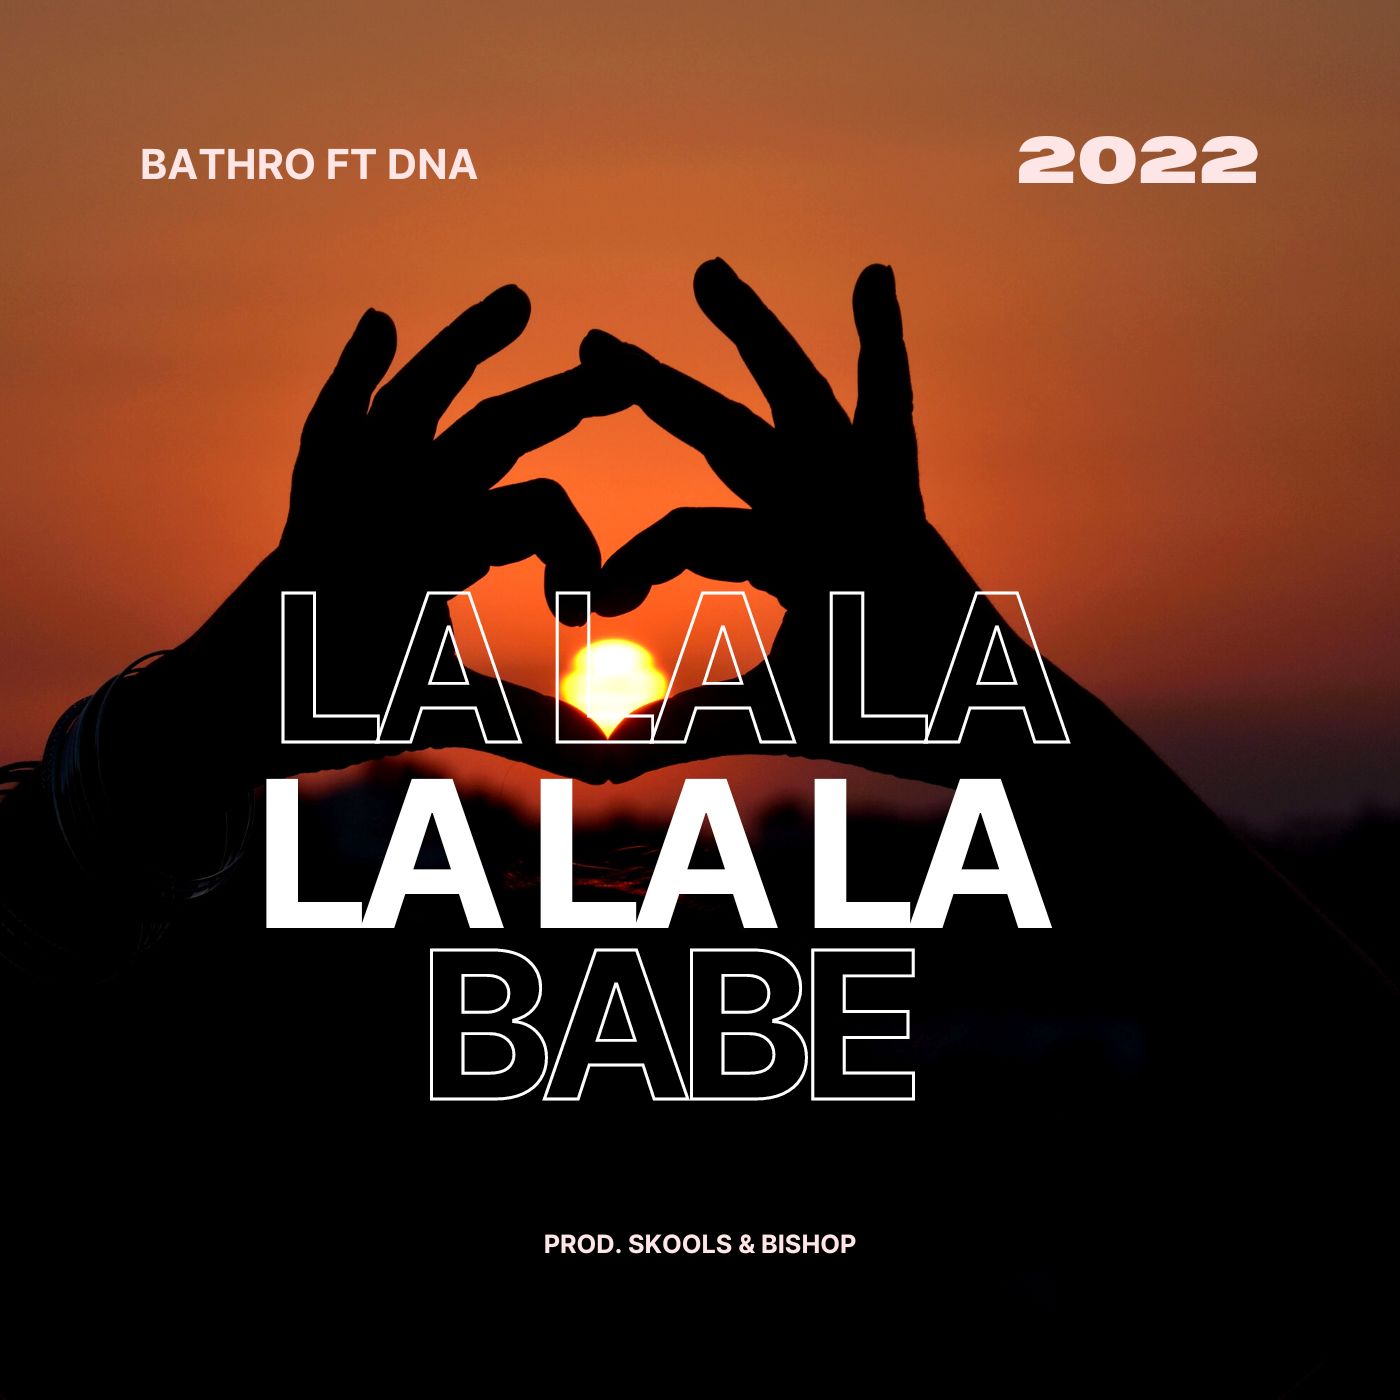 Bathro-ft-Dna-La-la-la-babe-Prod-by-Skools-Bishop